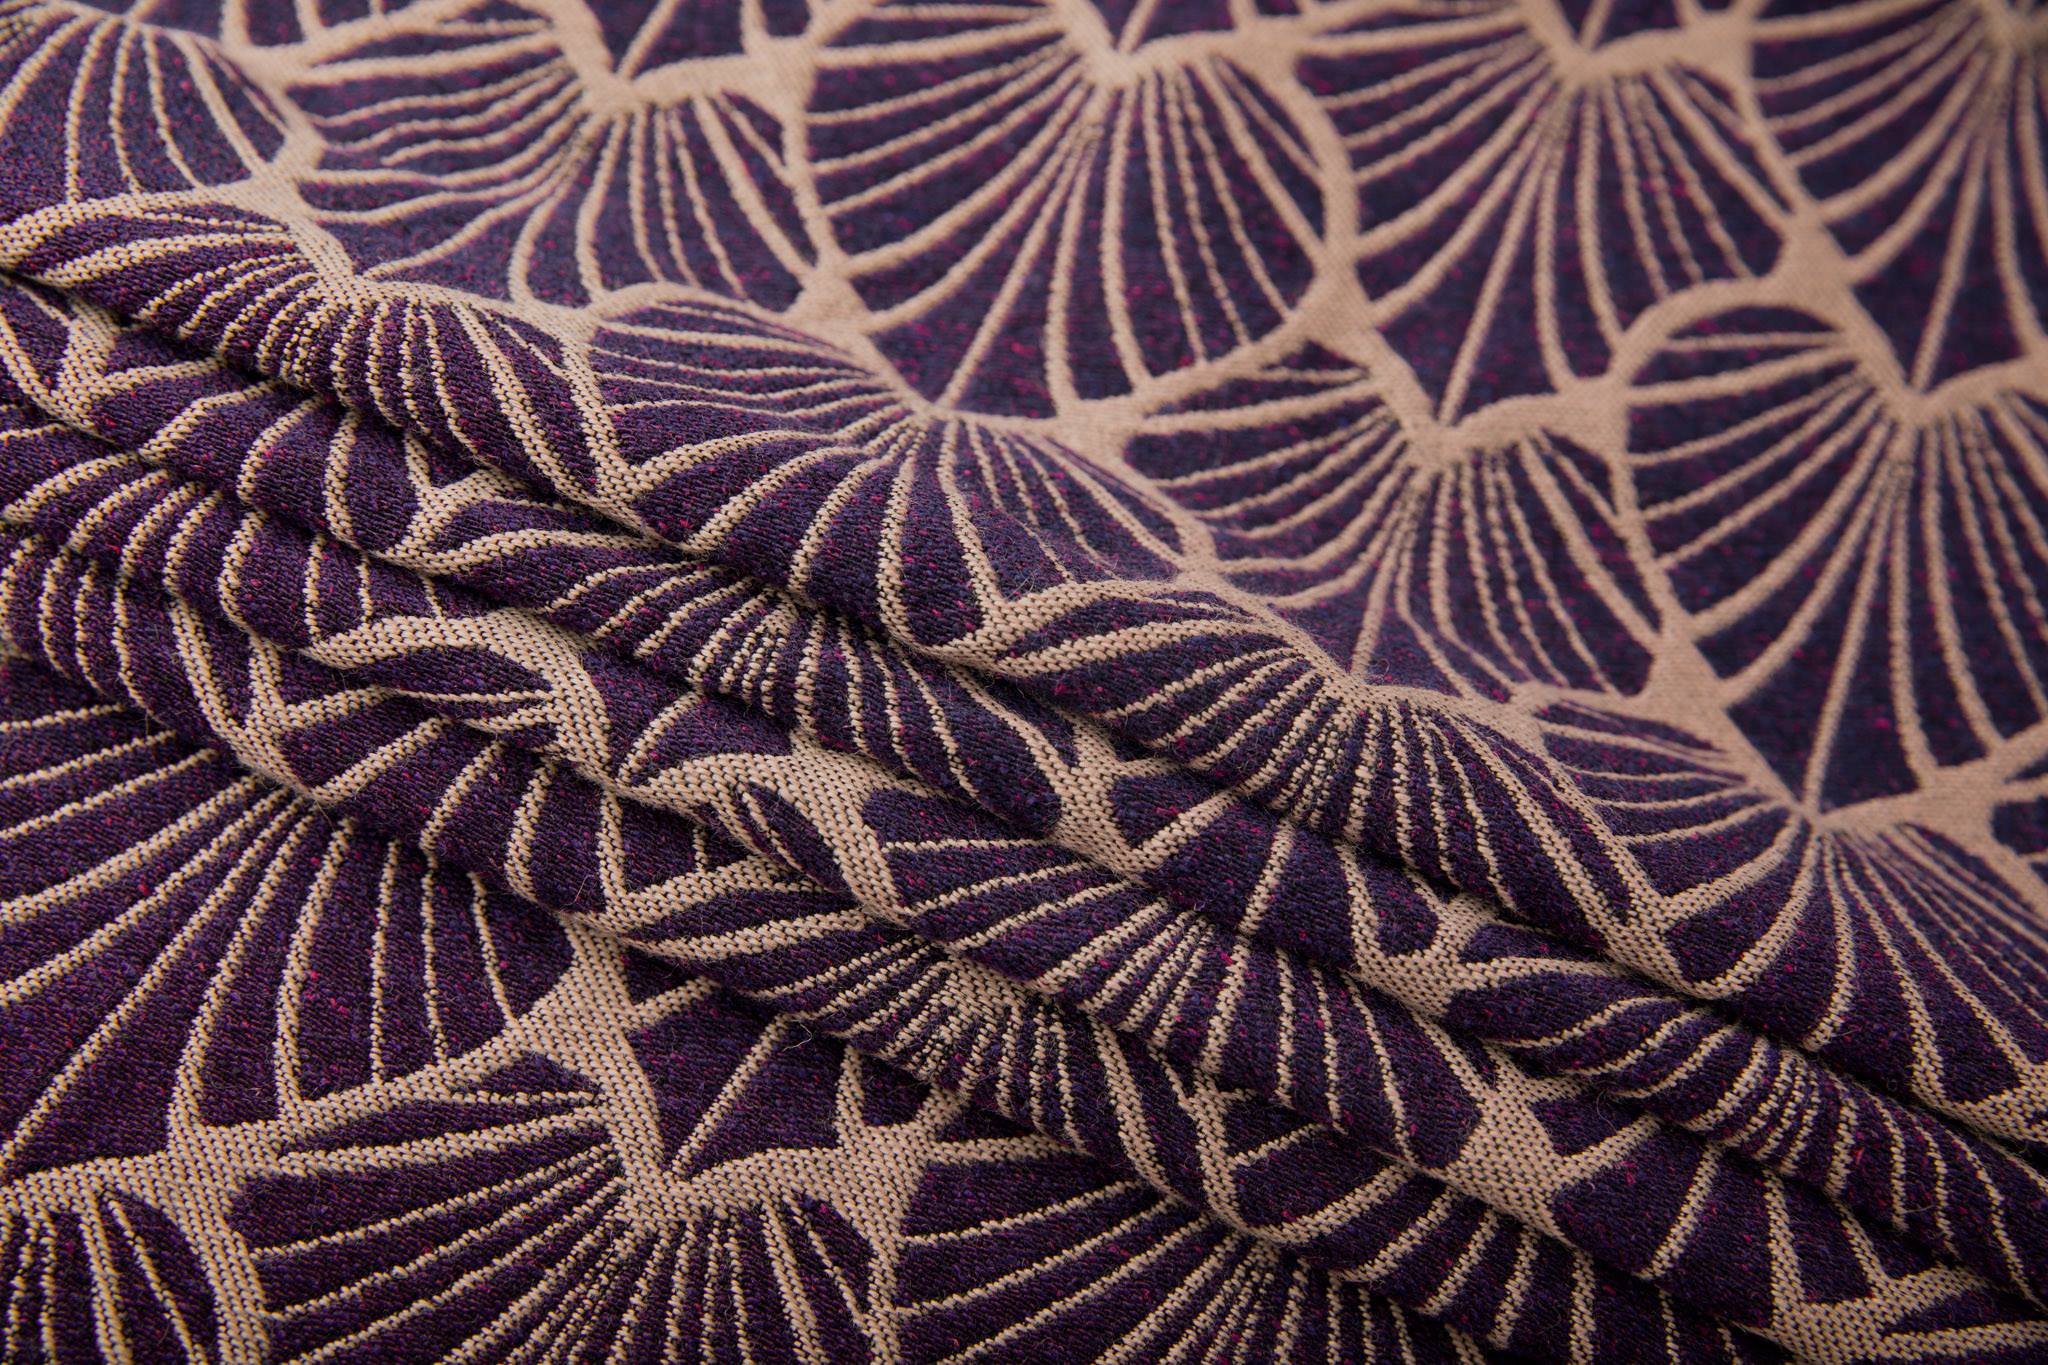 Linuschka Ipomee Pastel Wrap (japanese silk, merino, alpaka) Image